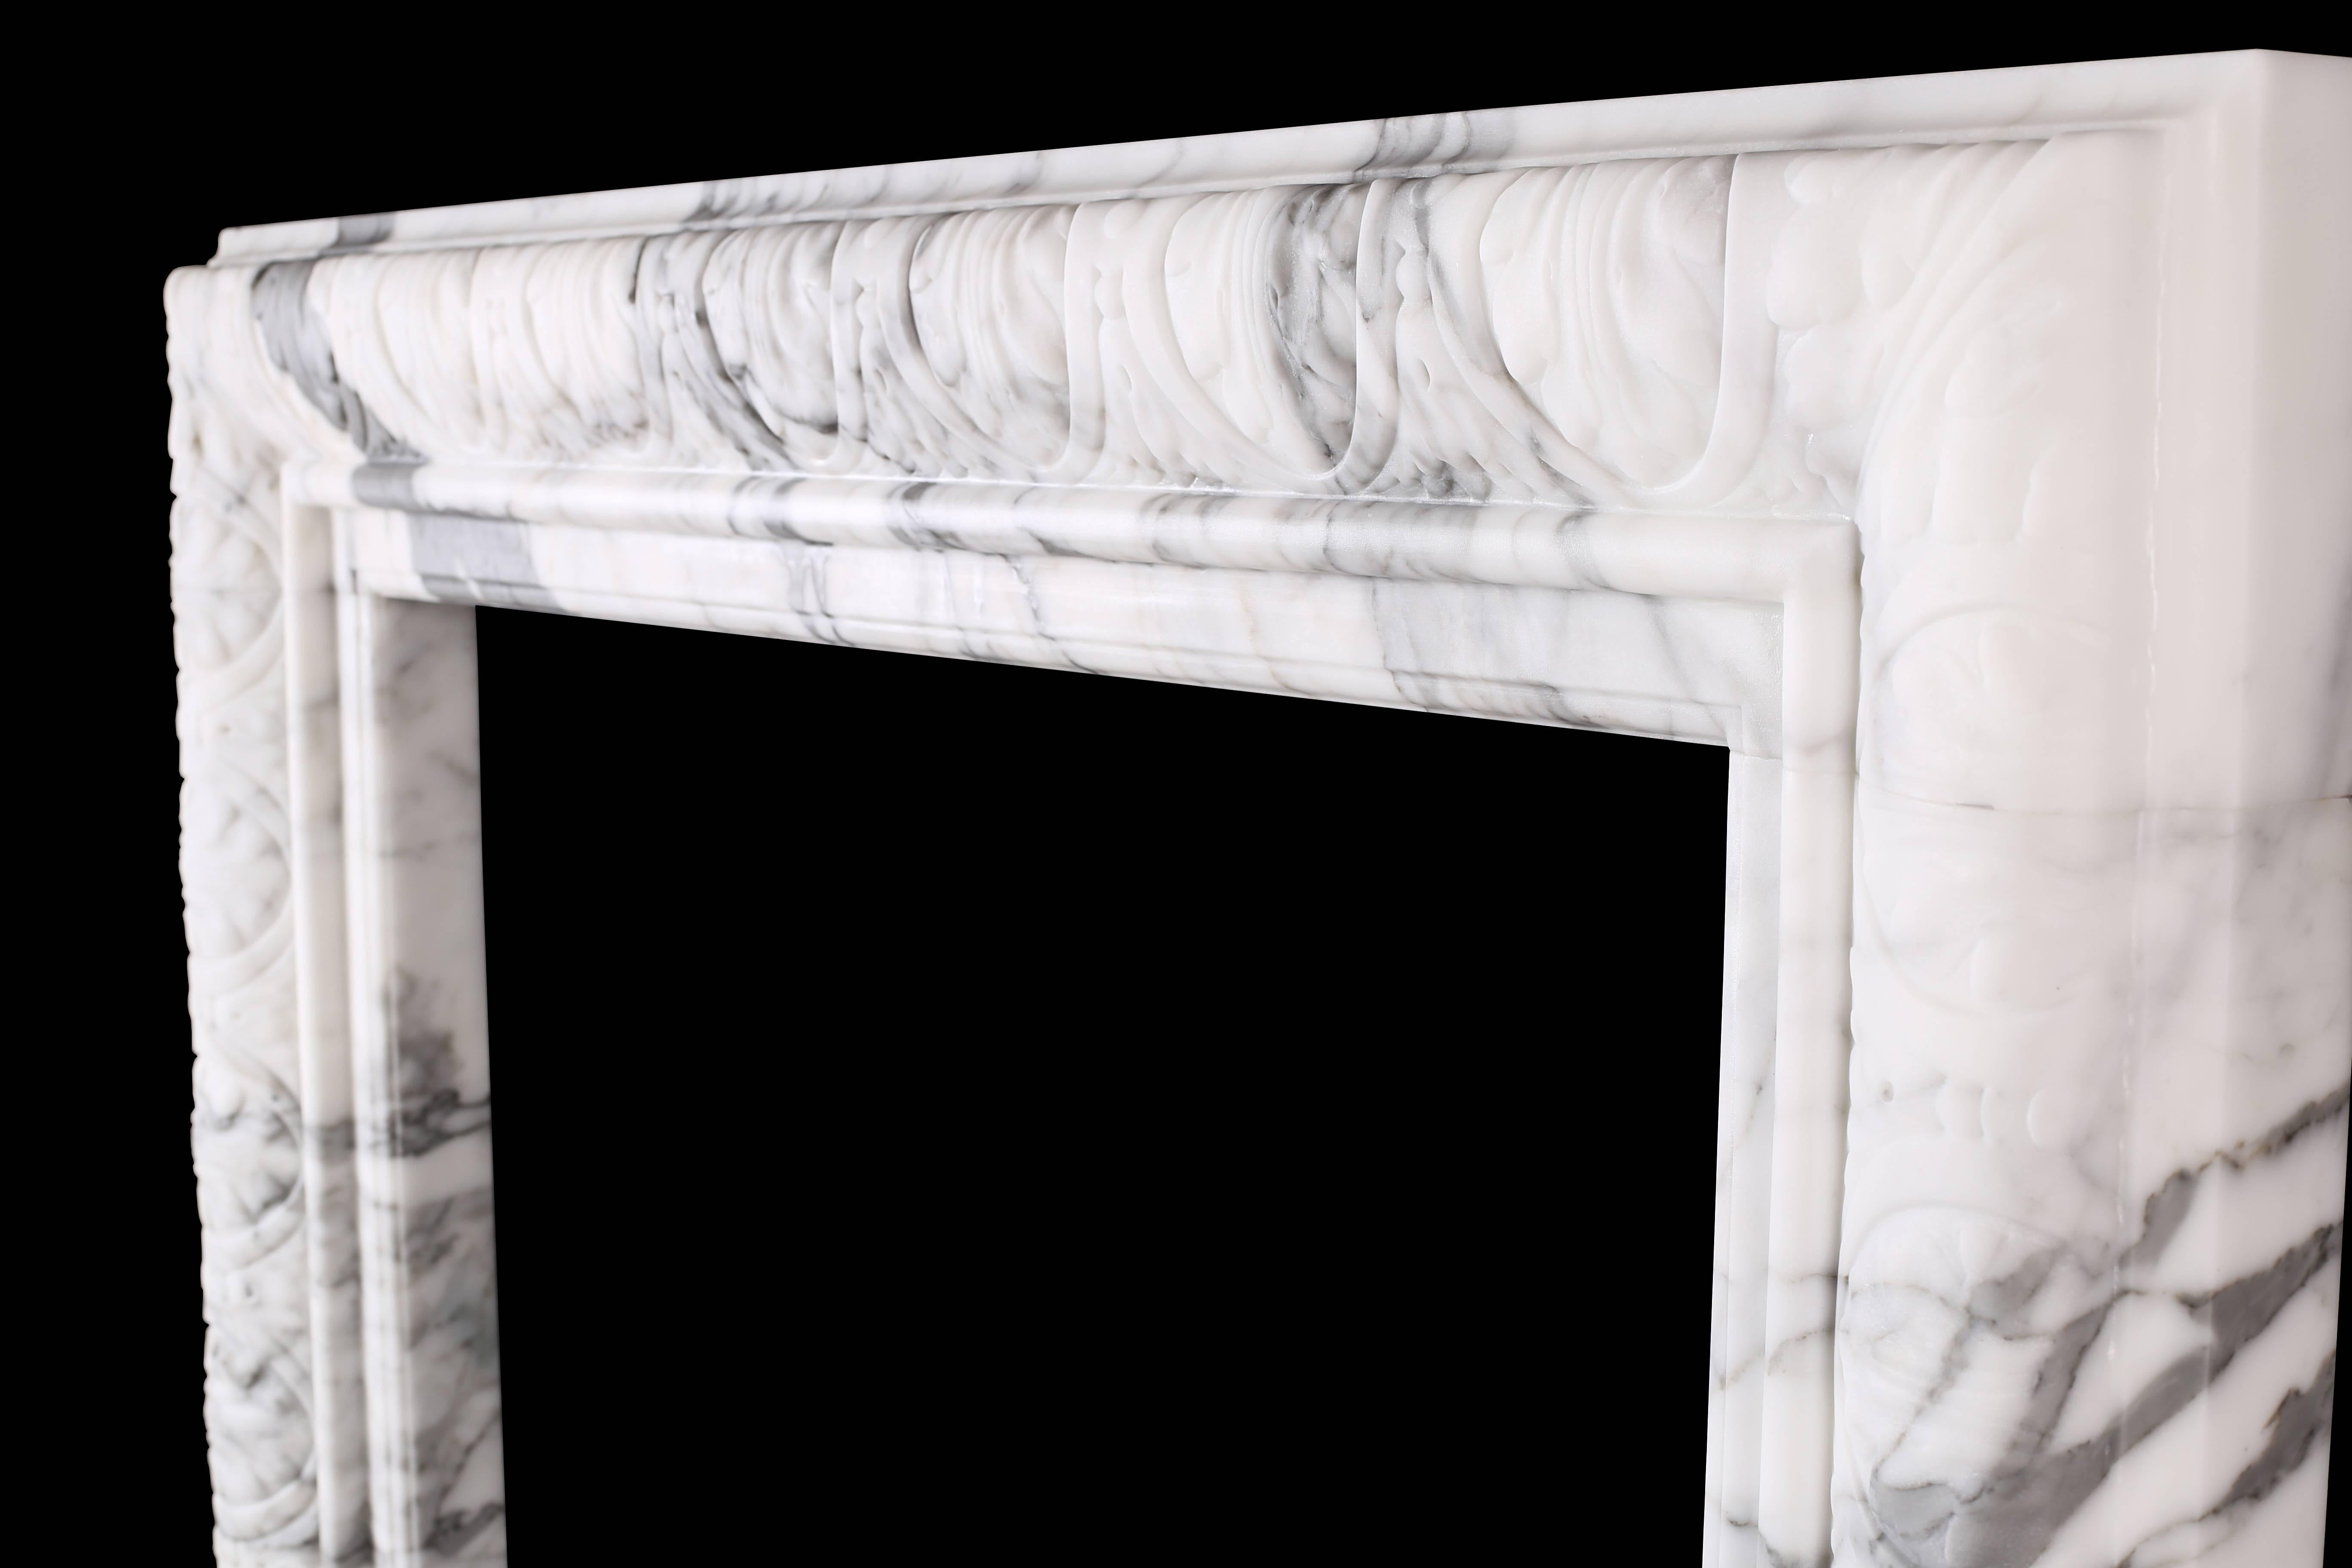 An elegant regency Baroque bolection fireplace in Italian white statuary marble.

Measures: Depth 4 1/2 in (115mm)
External height 45 3/4 in (1162mm)
External width 54 in (1370mm)
Internal height 38 in (965mm)
Internal width 38 1/4 in